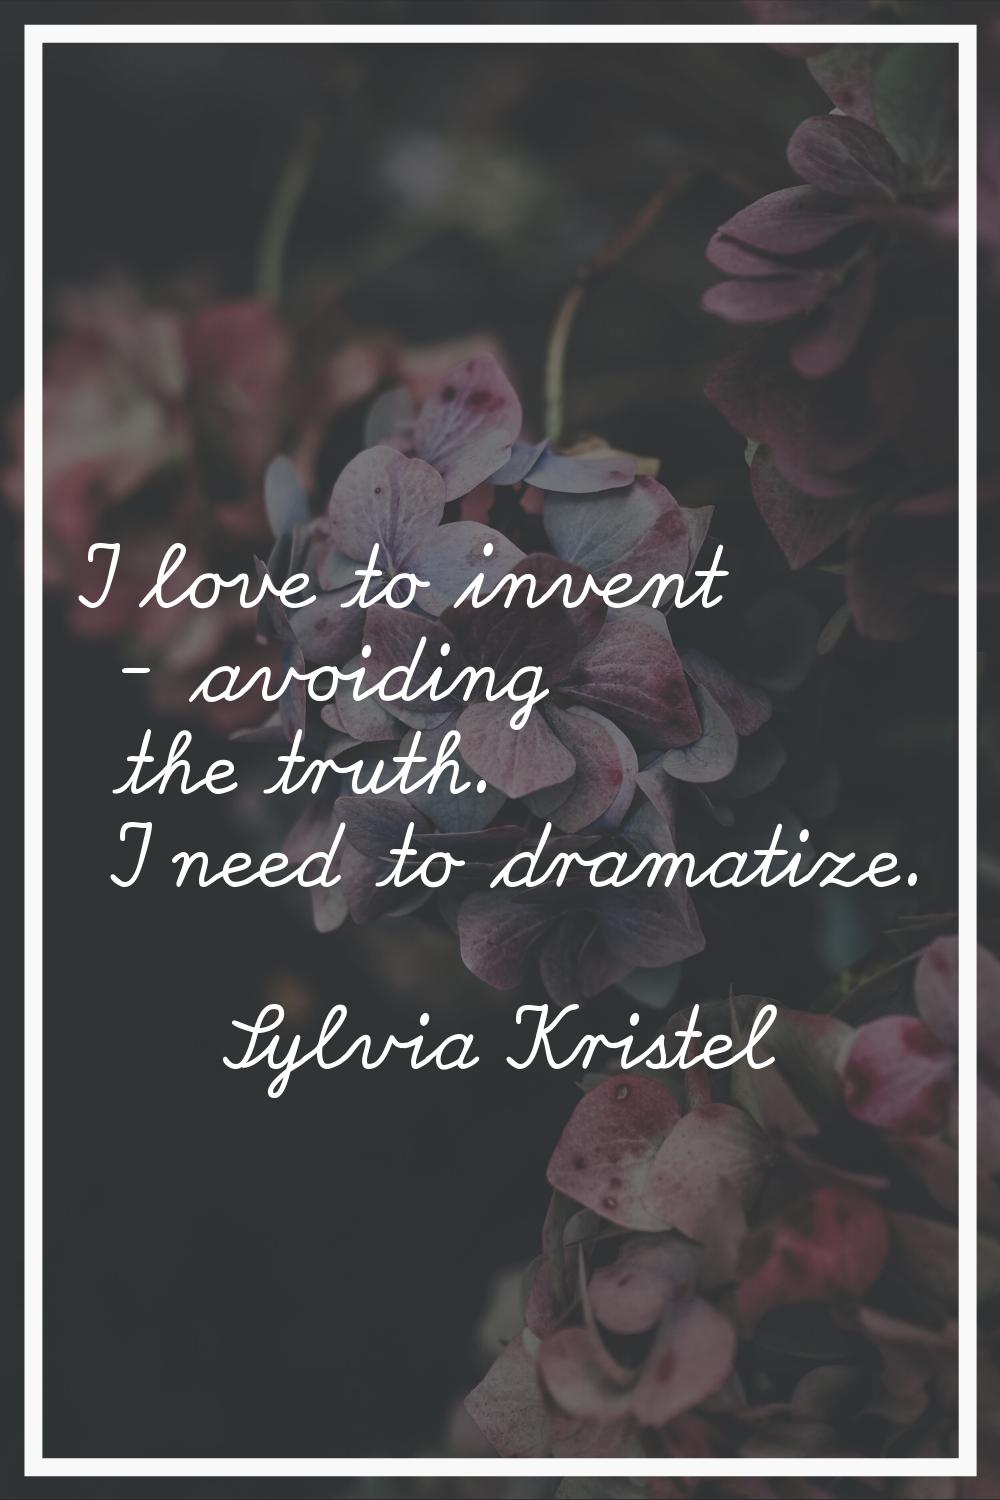 I love to invent - avoiding the truth. I need to dramatize.